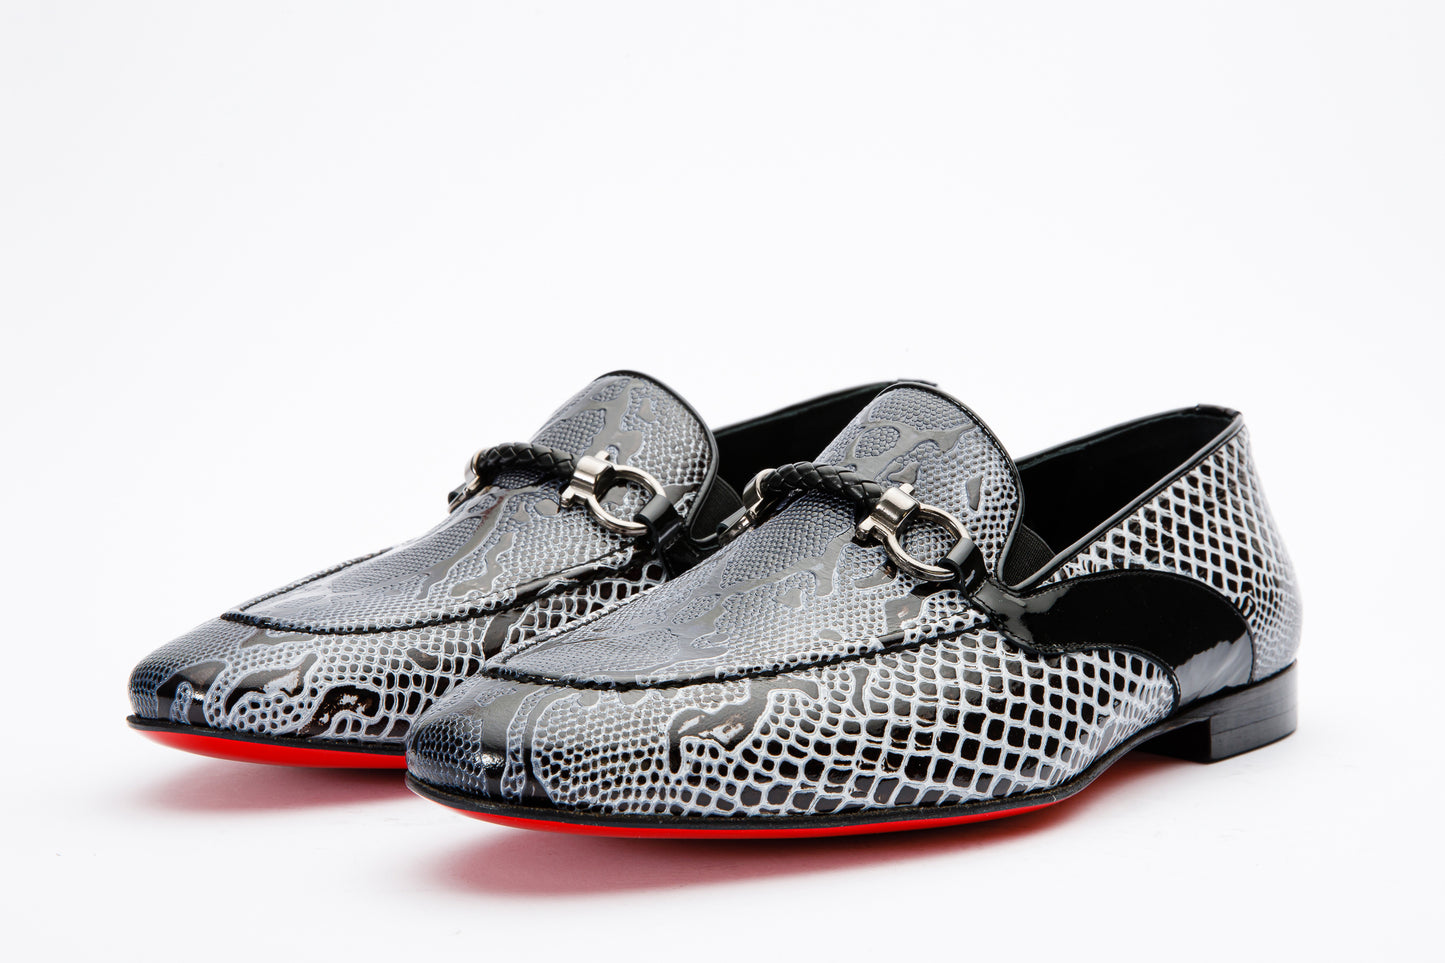 The Milano Black/White Shoe Bit Loafer Men  shoe